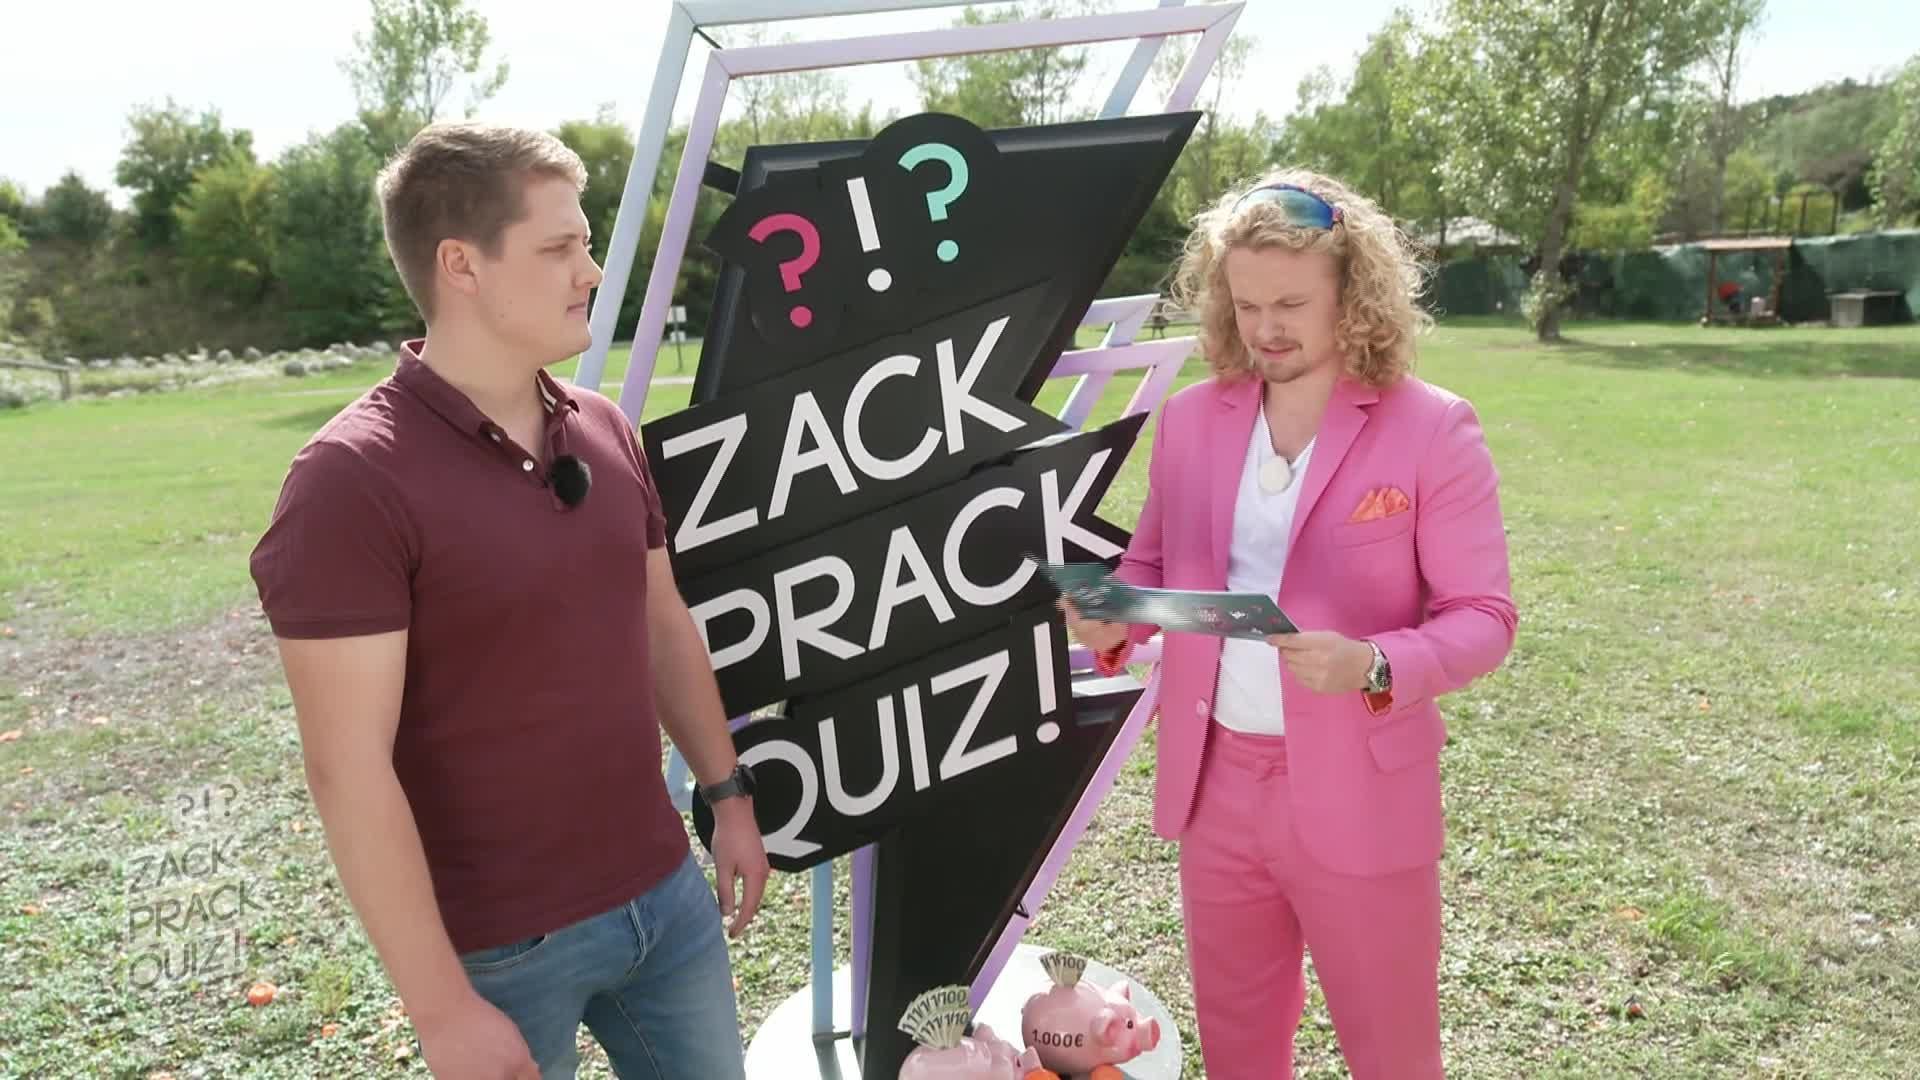 Zack, Prack, Quiz - Staffel 1 Folge 10